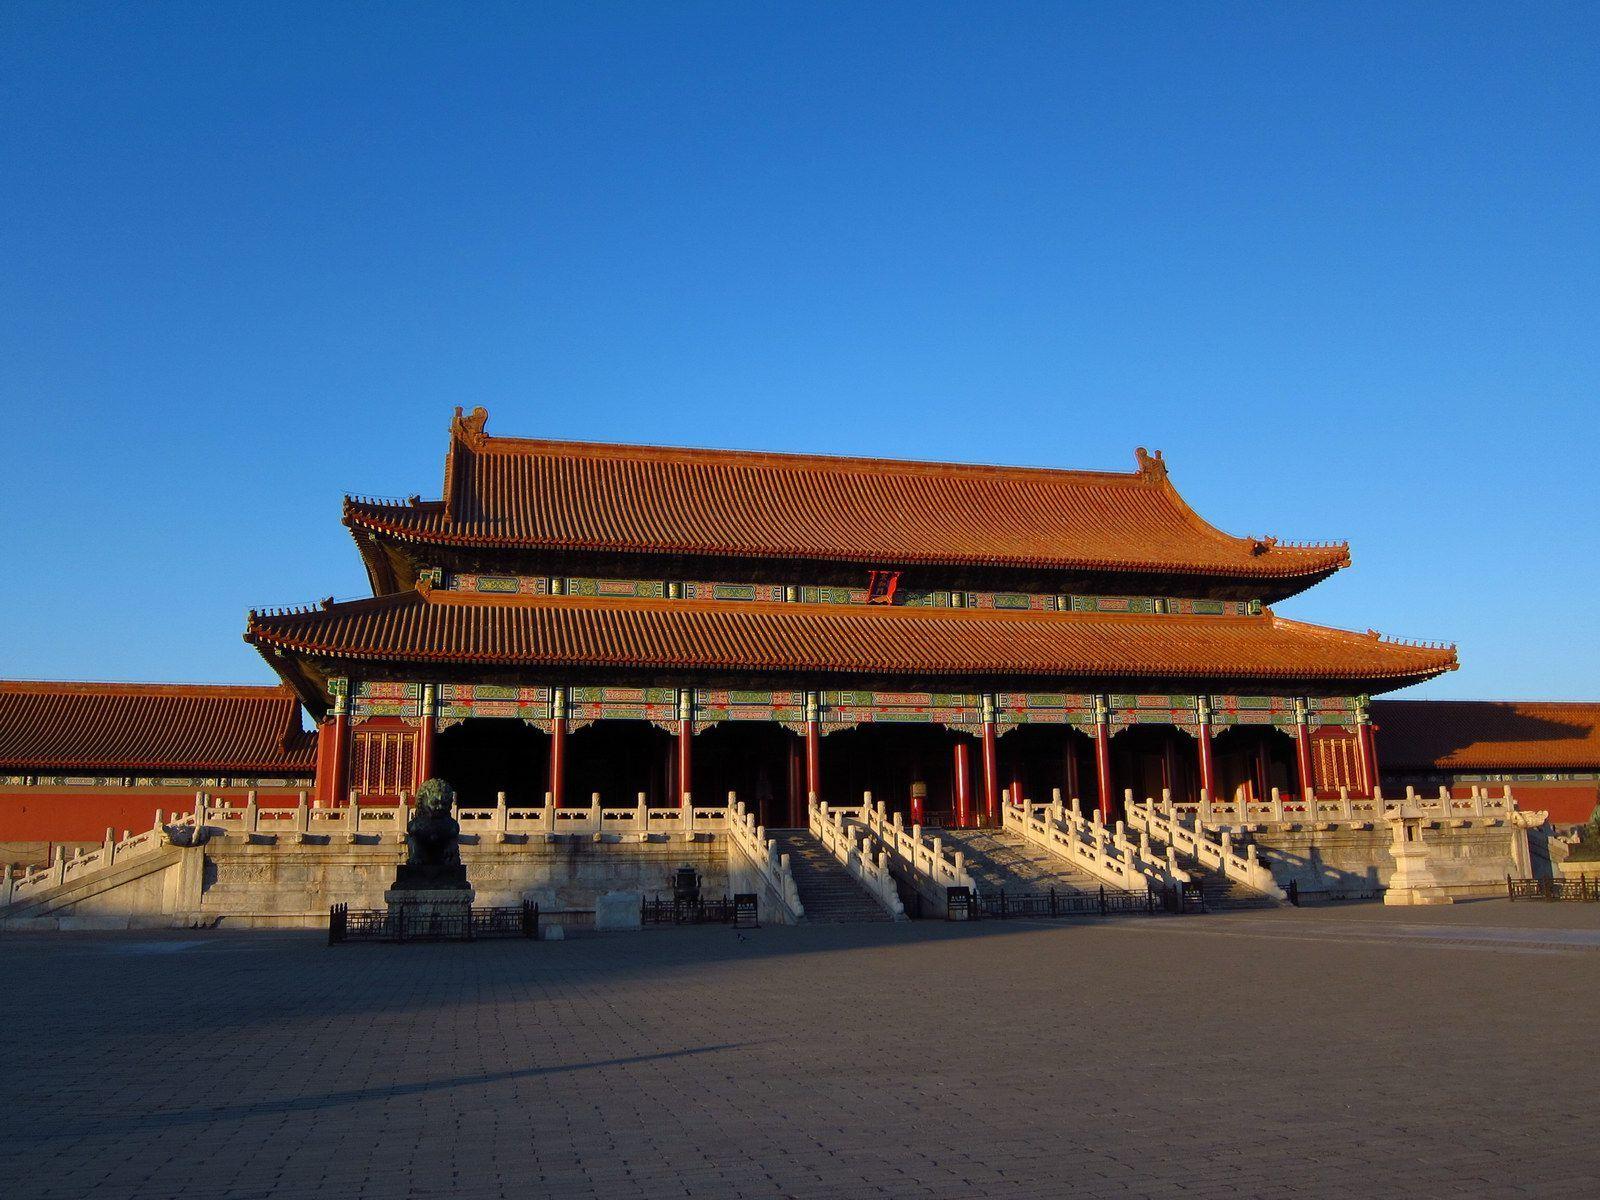 Forbidden City Beijing Wallpaper